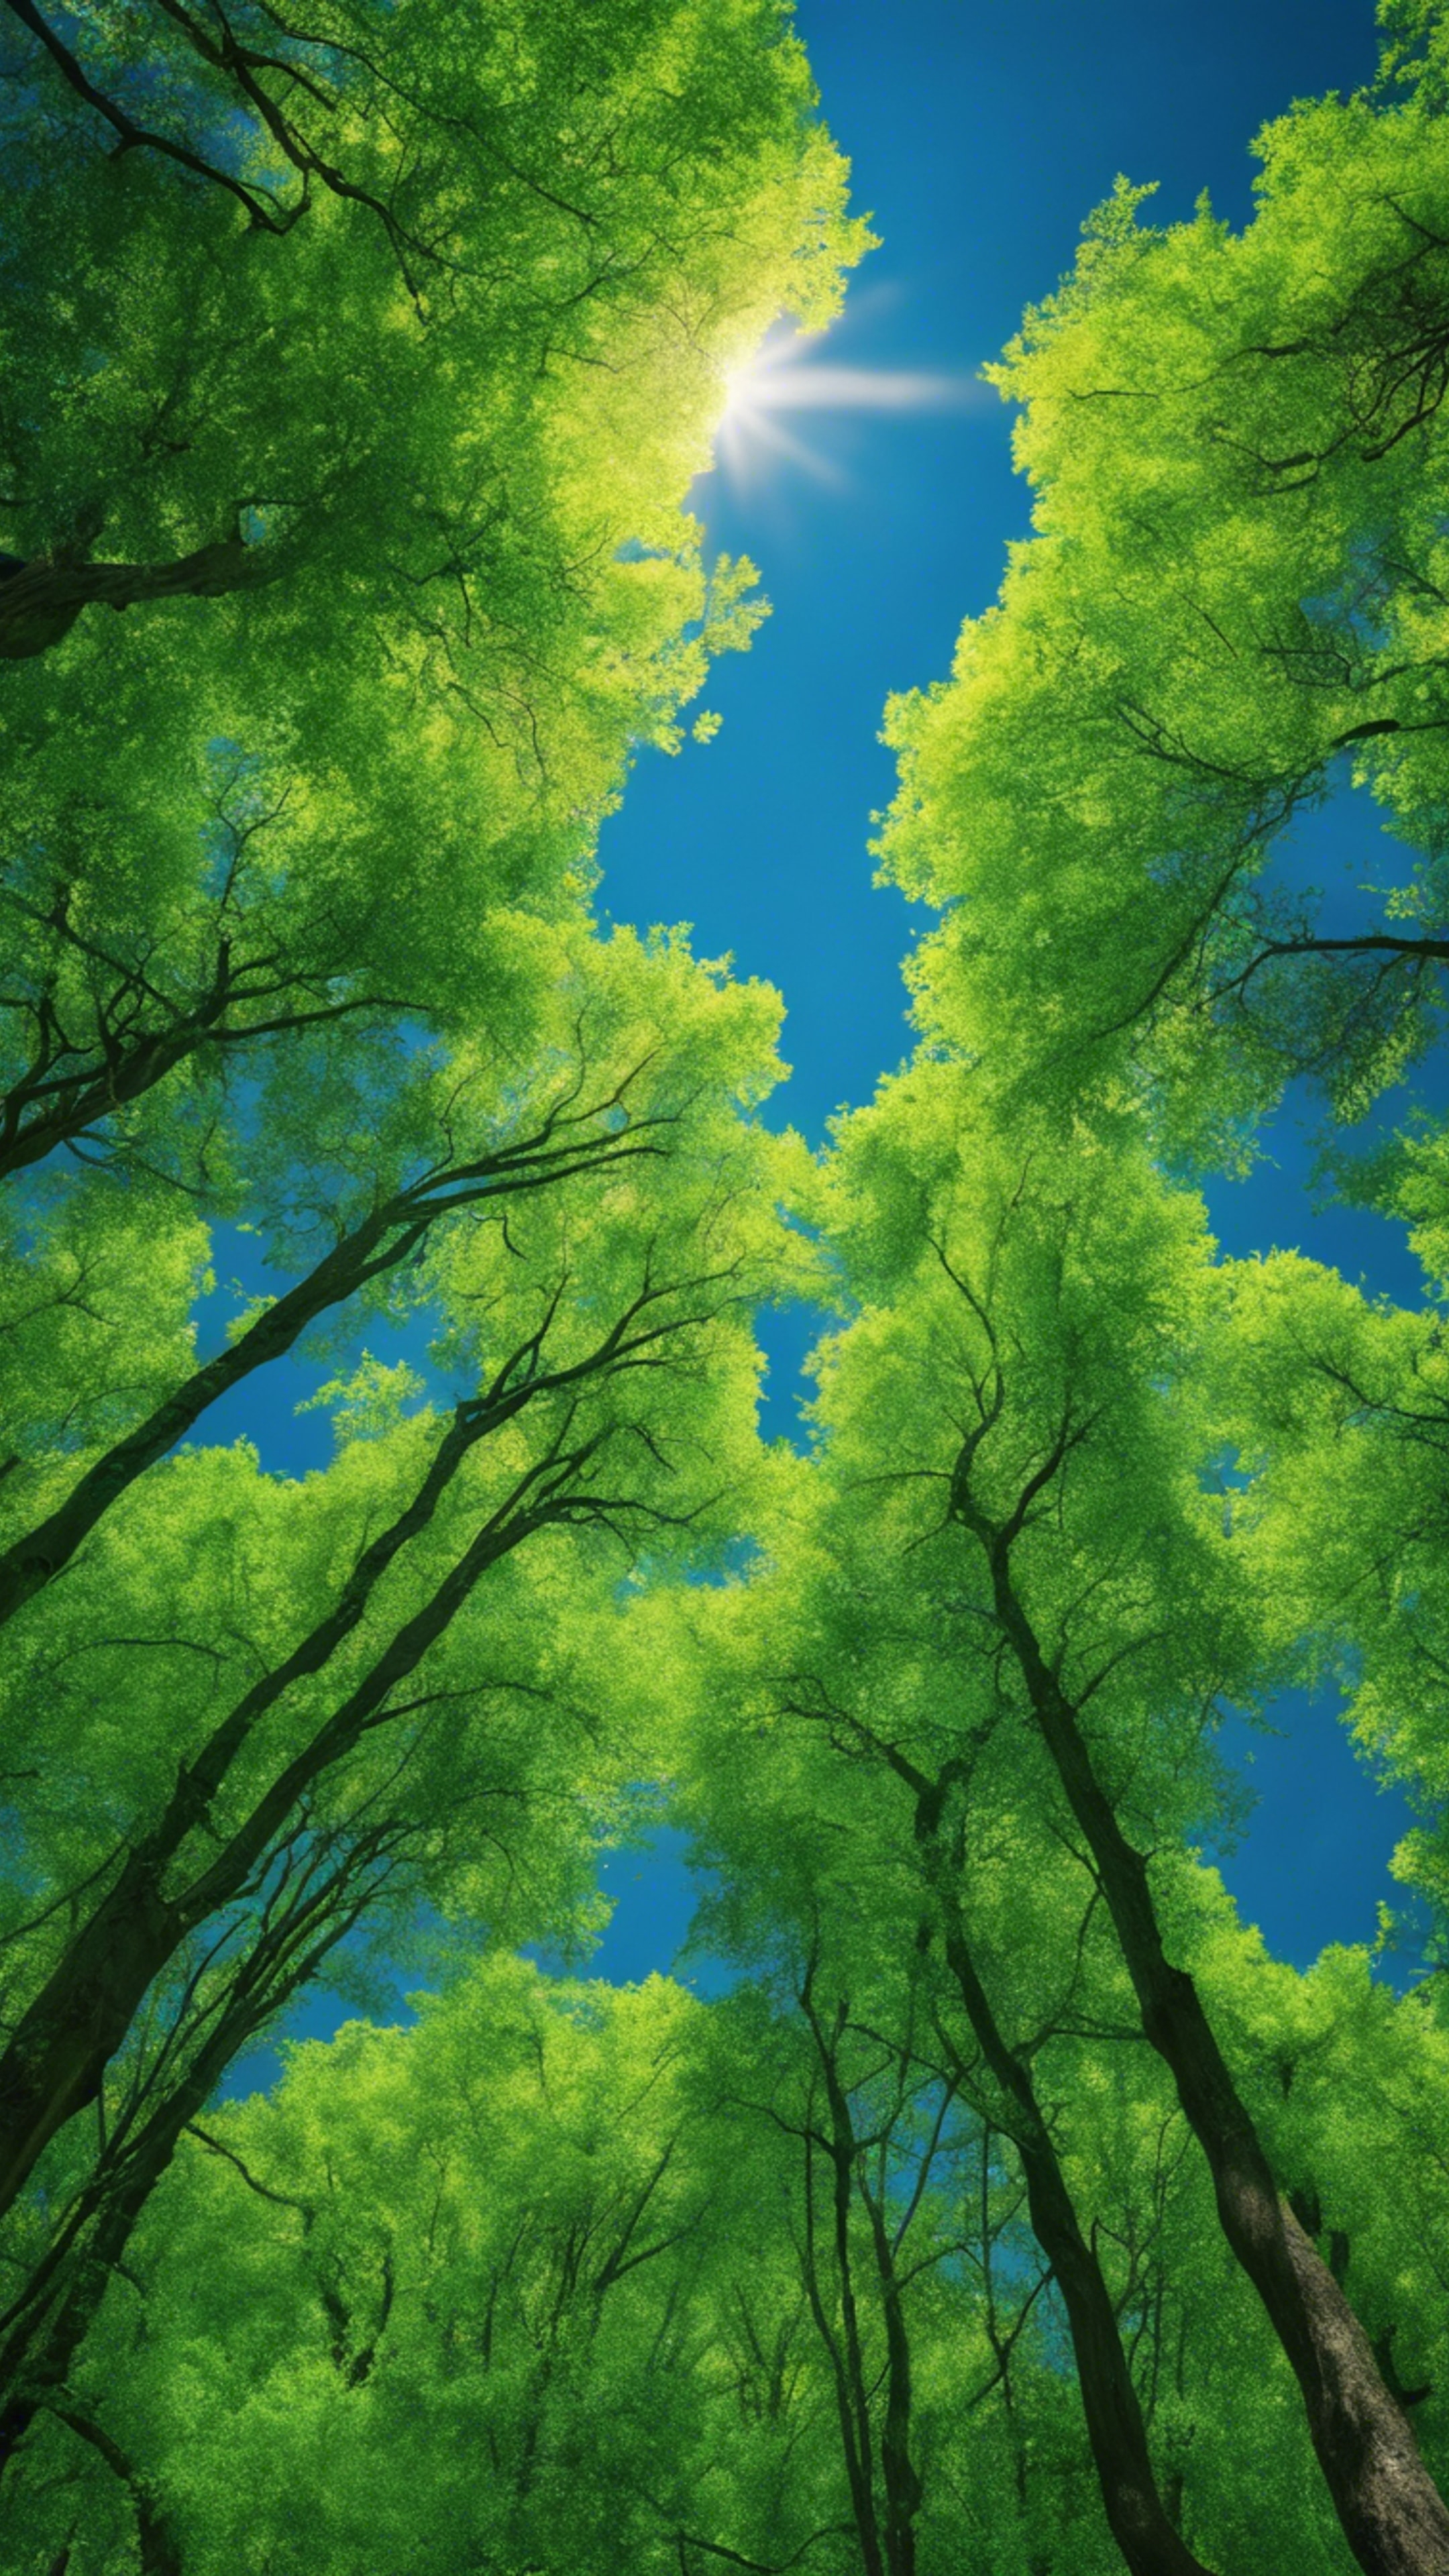 A vibrant green forest under a deep blue sky. Papel de parede[dfb81149561043a7a18e]